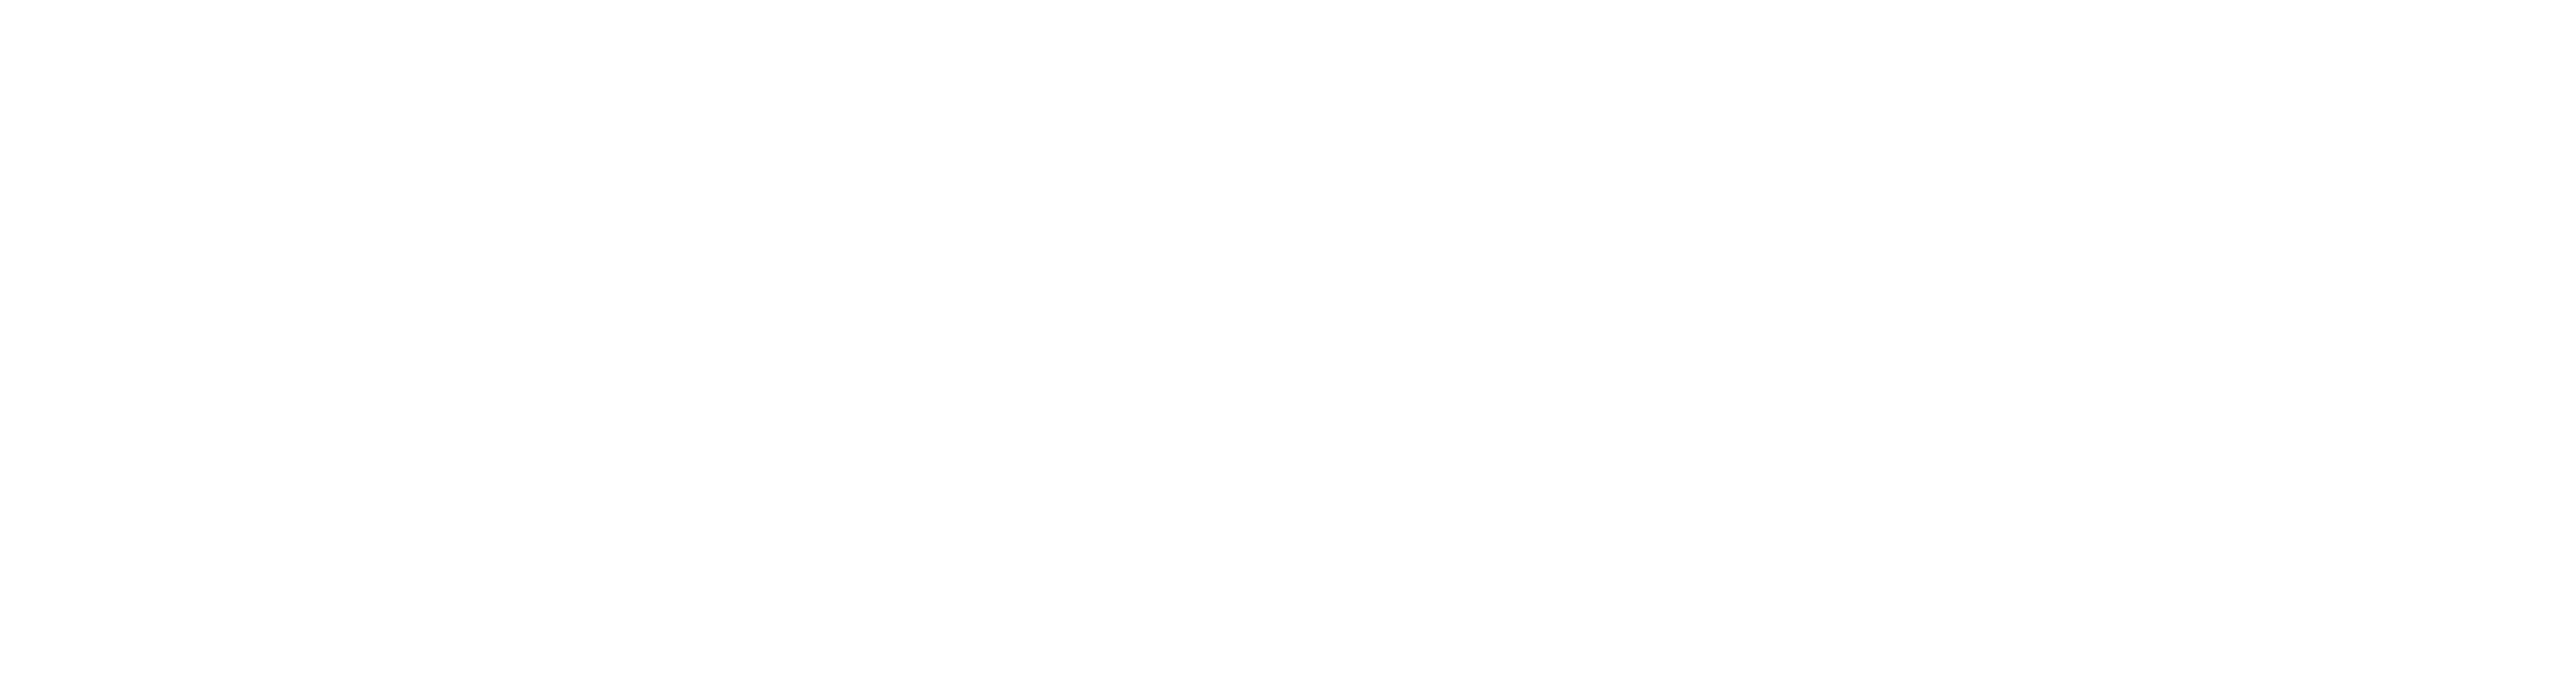 Ant Anstead Master Mechanic logo